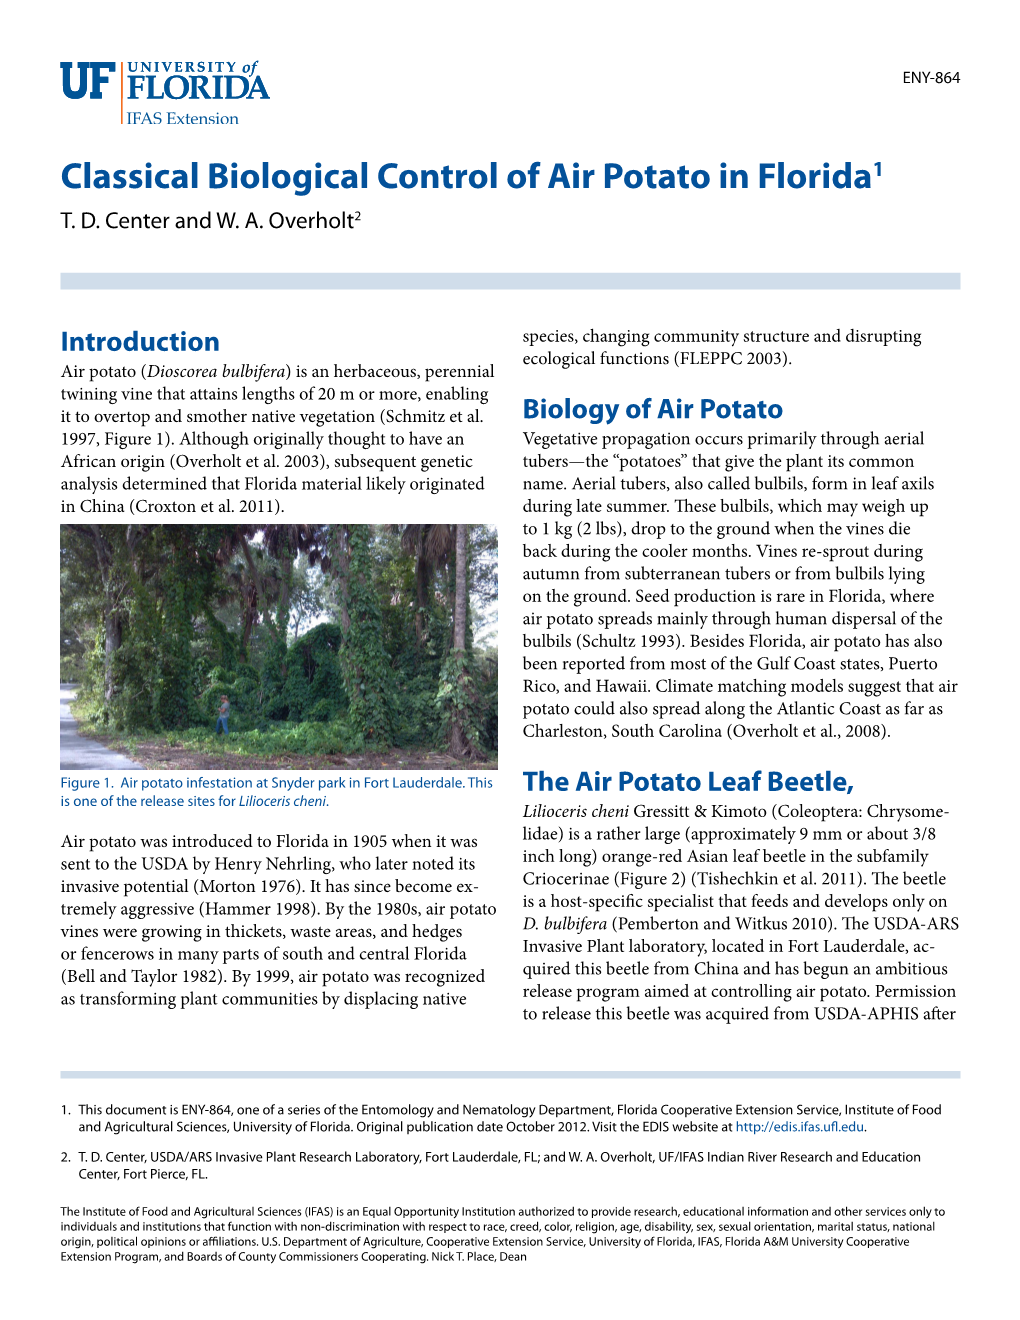 Classical Biological Control of Air Potato in Florida1 T